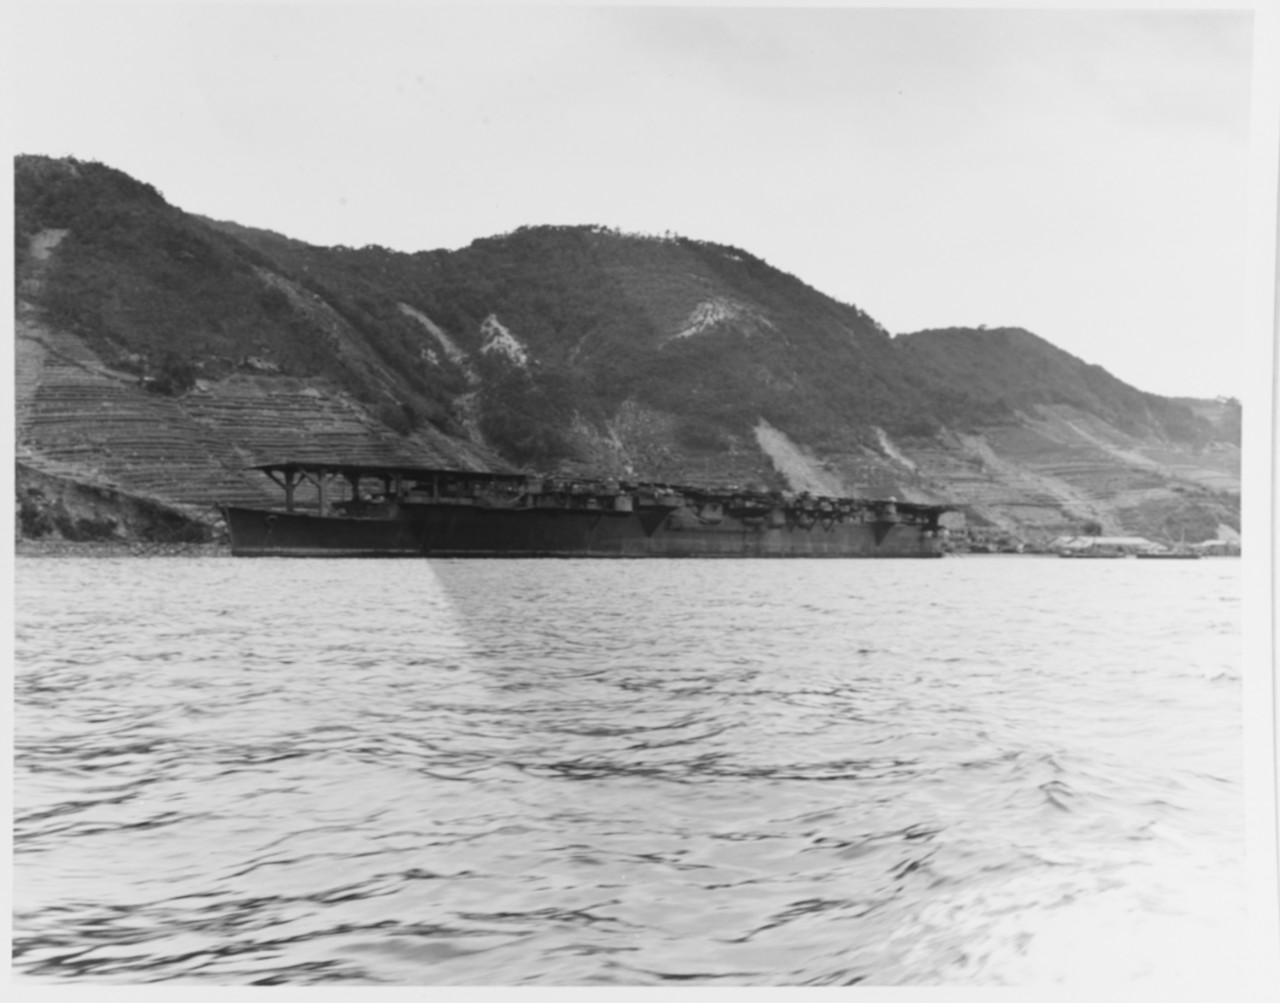 Japanese Carrier RYUHO